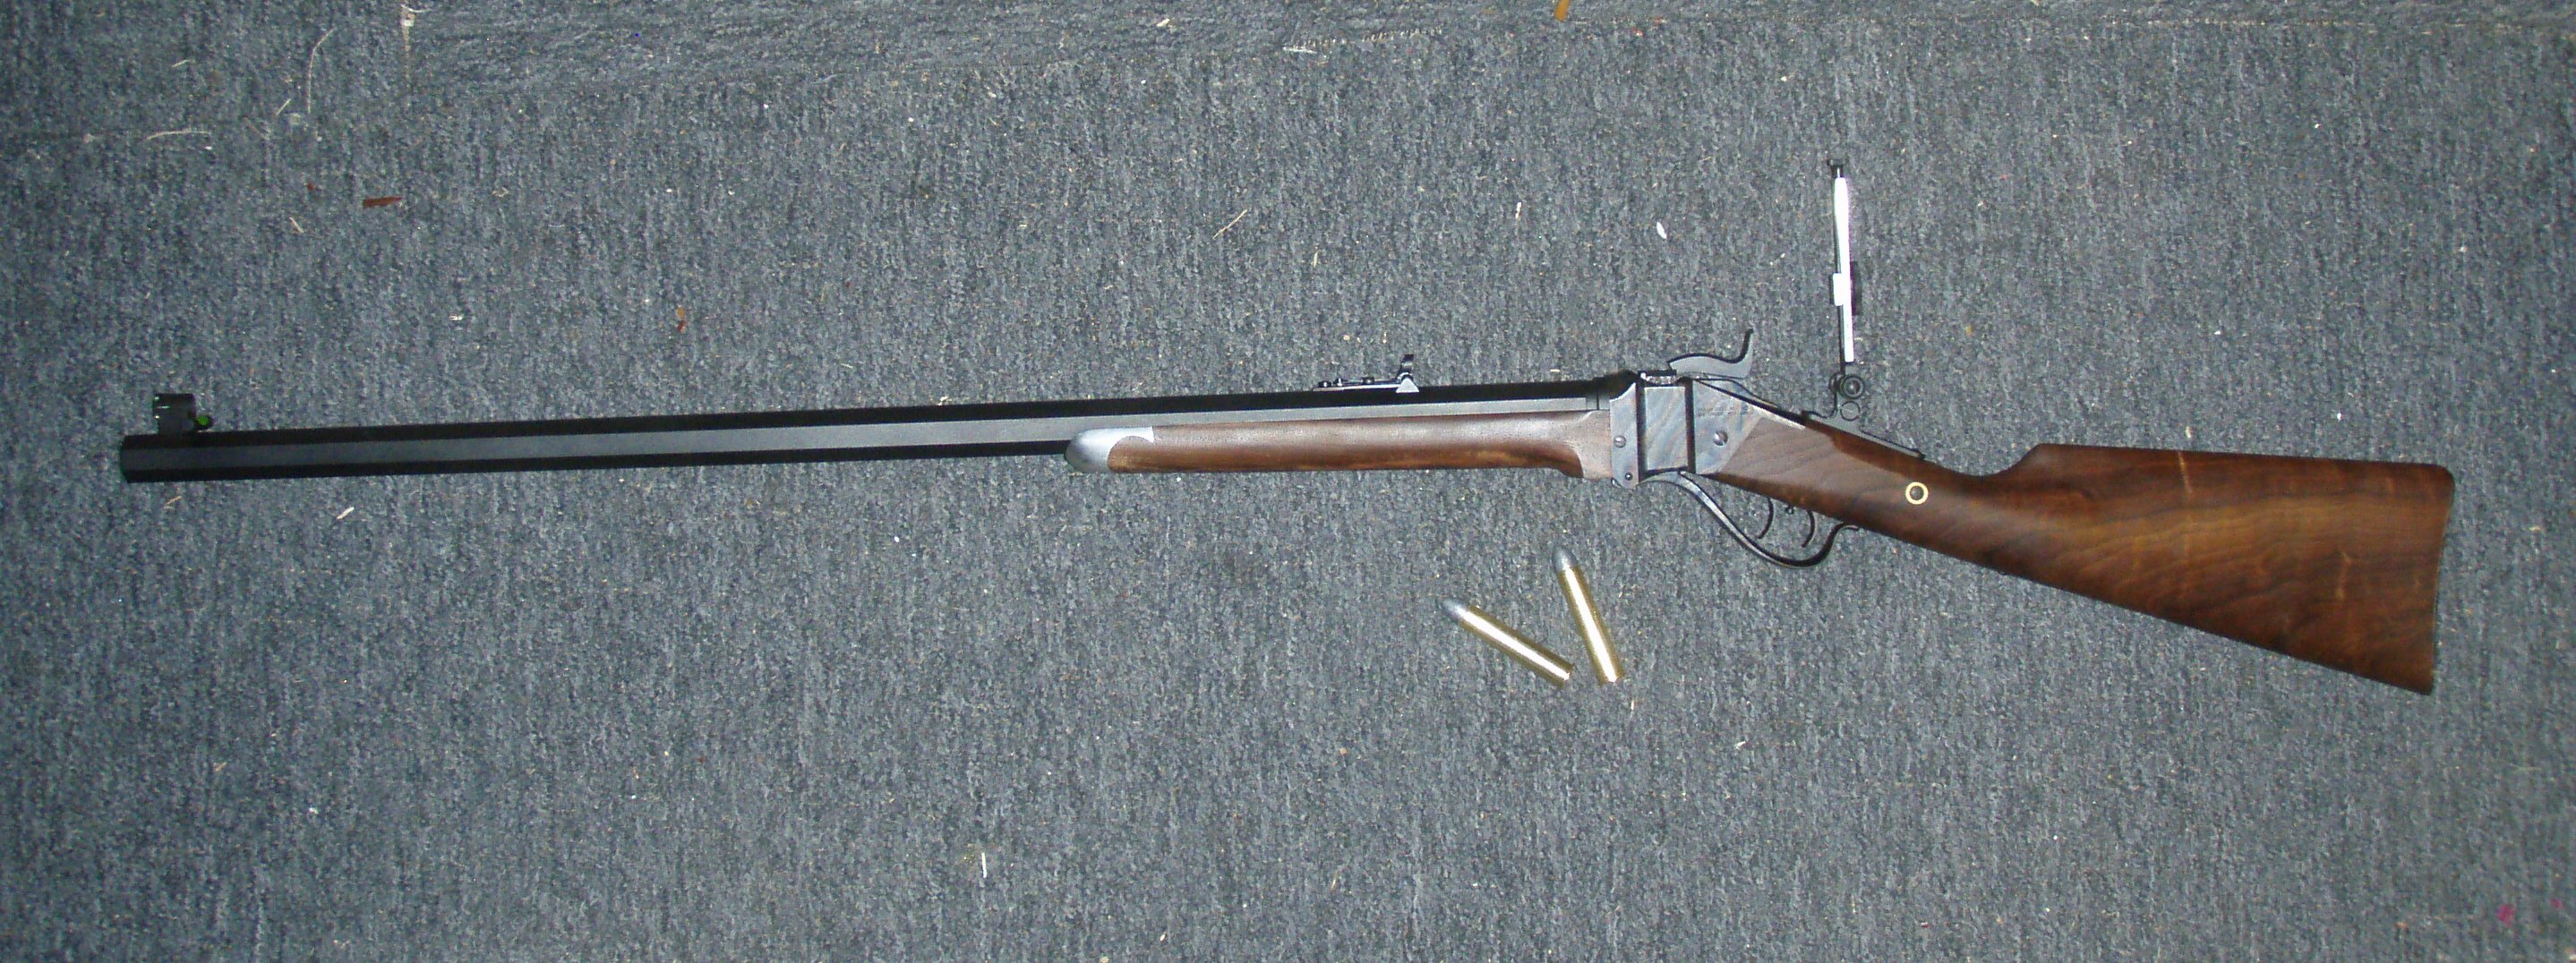 Sharps 1874 Rifle #25